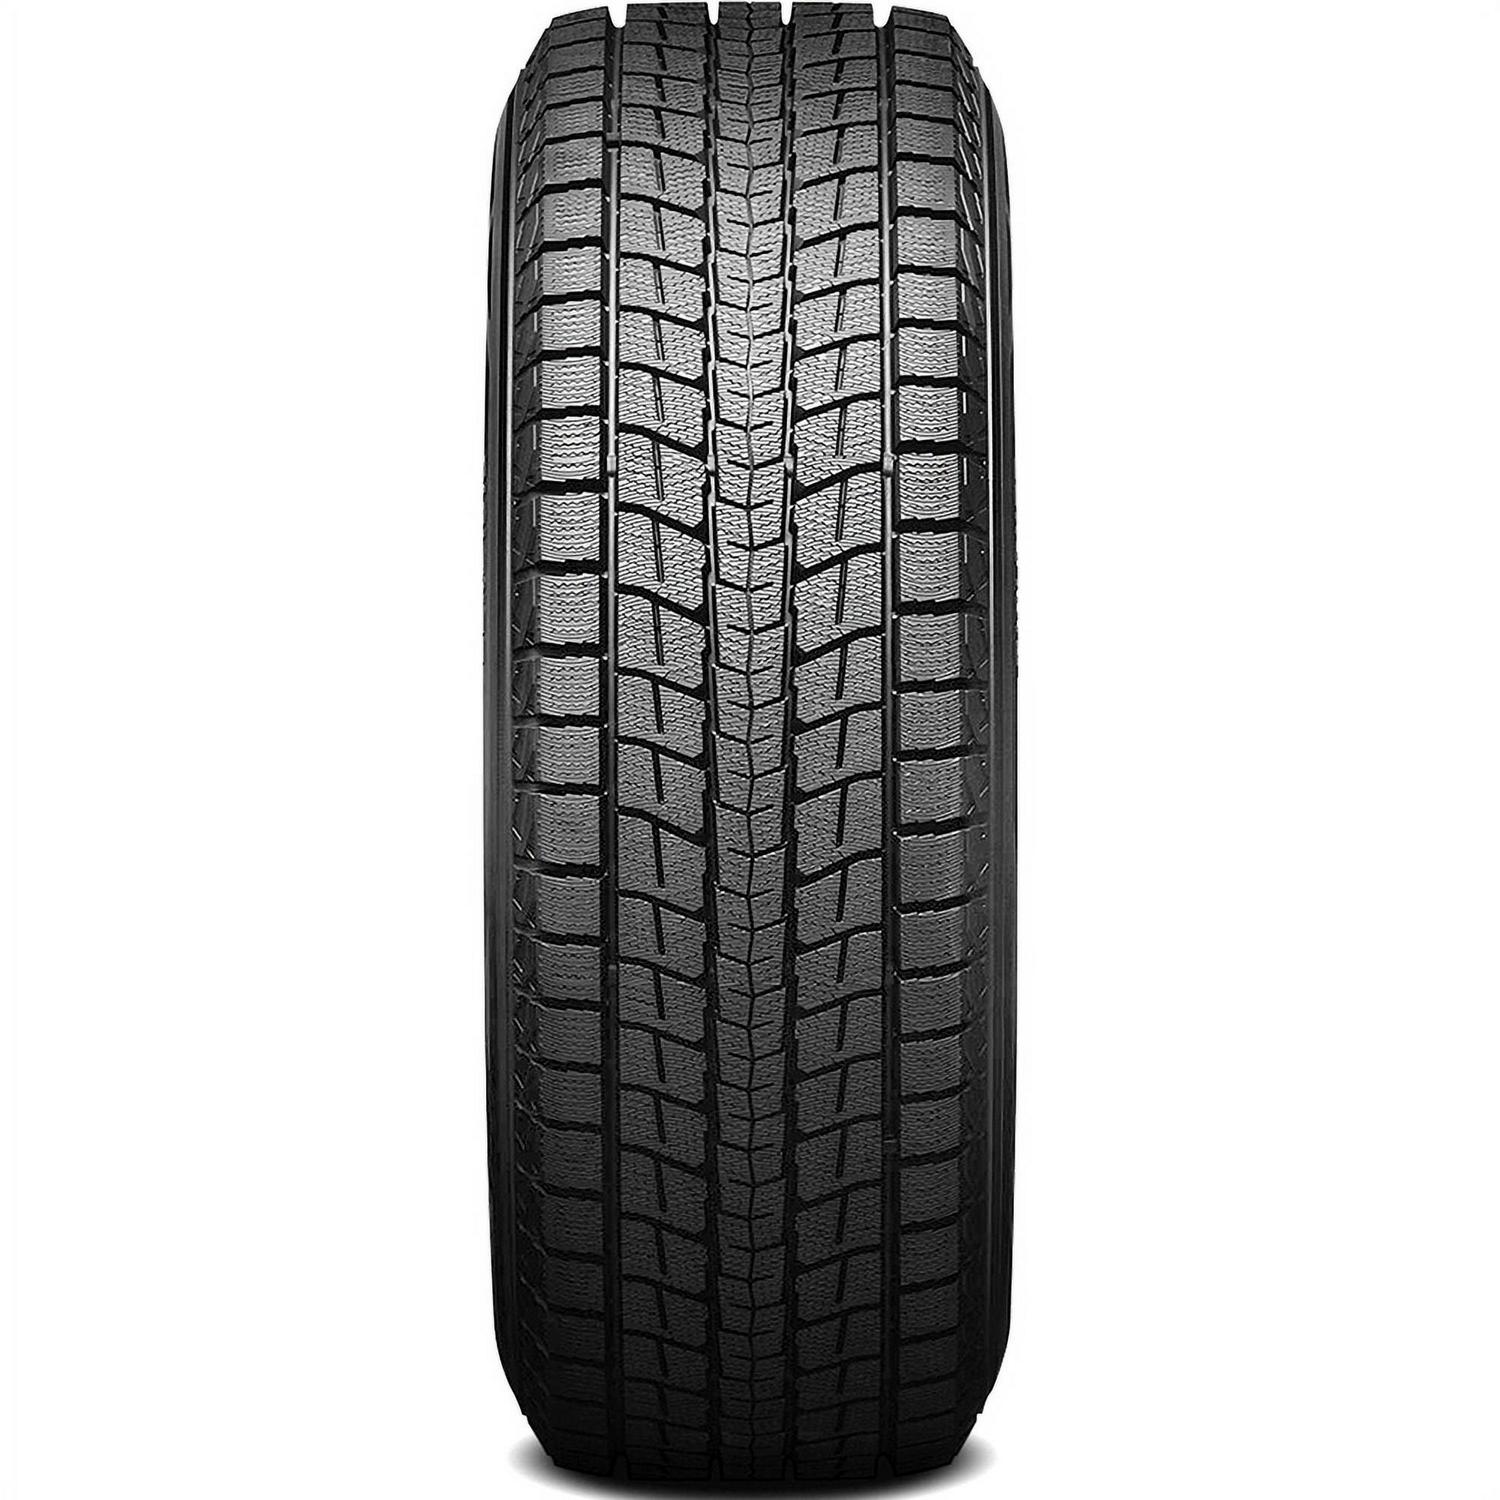 Dunlop Winter Maxx SJ8 225/60R17 99R (Studless) Snow Tire